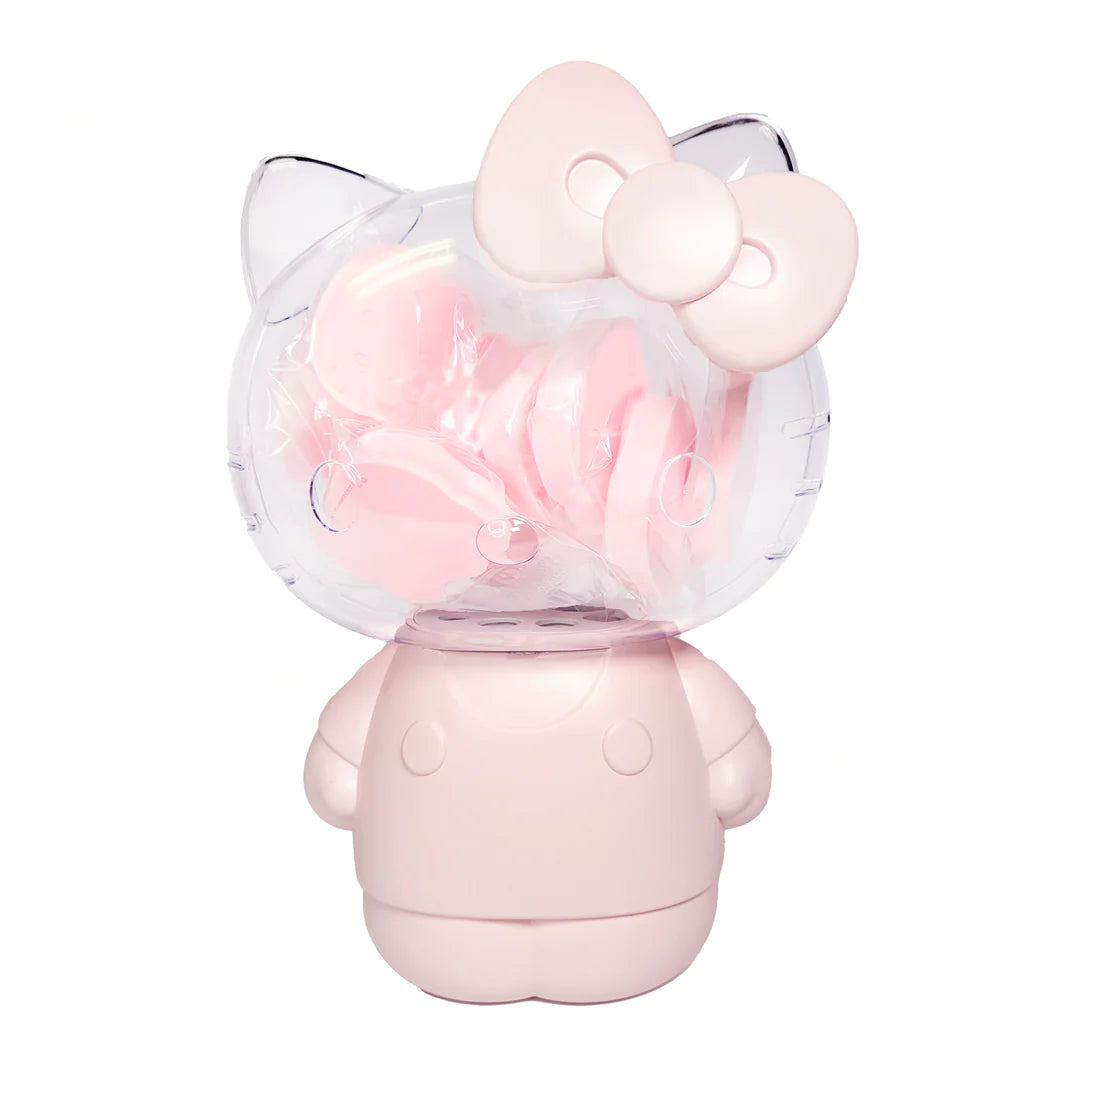 Impressions Vanity - Hello Kitty 12pc Sponge Gift Set Pink